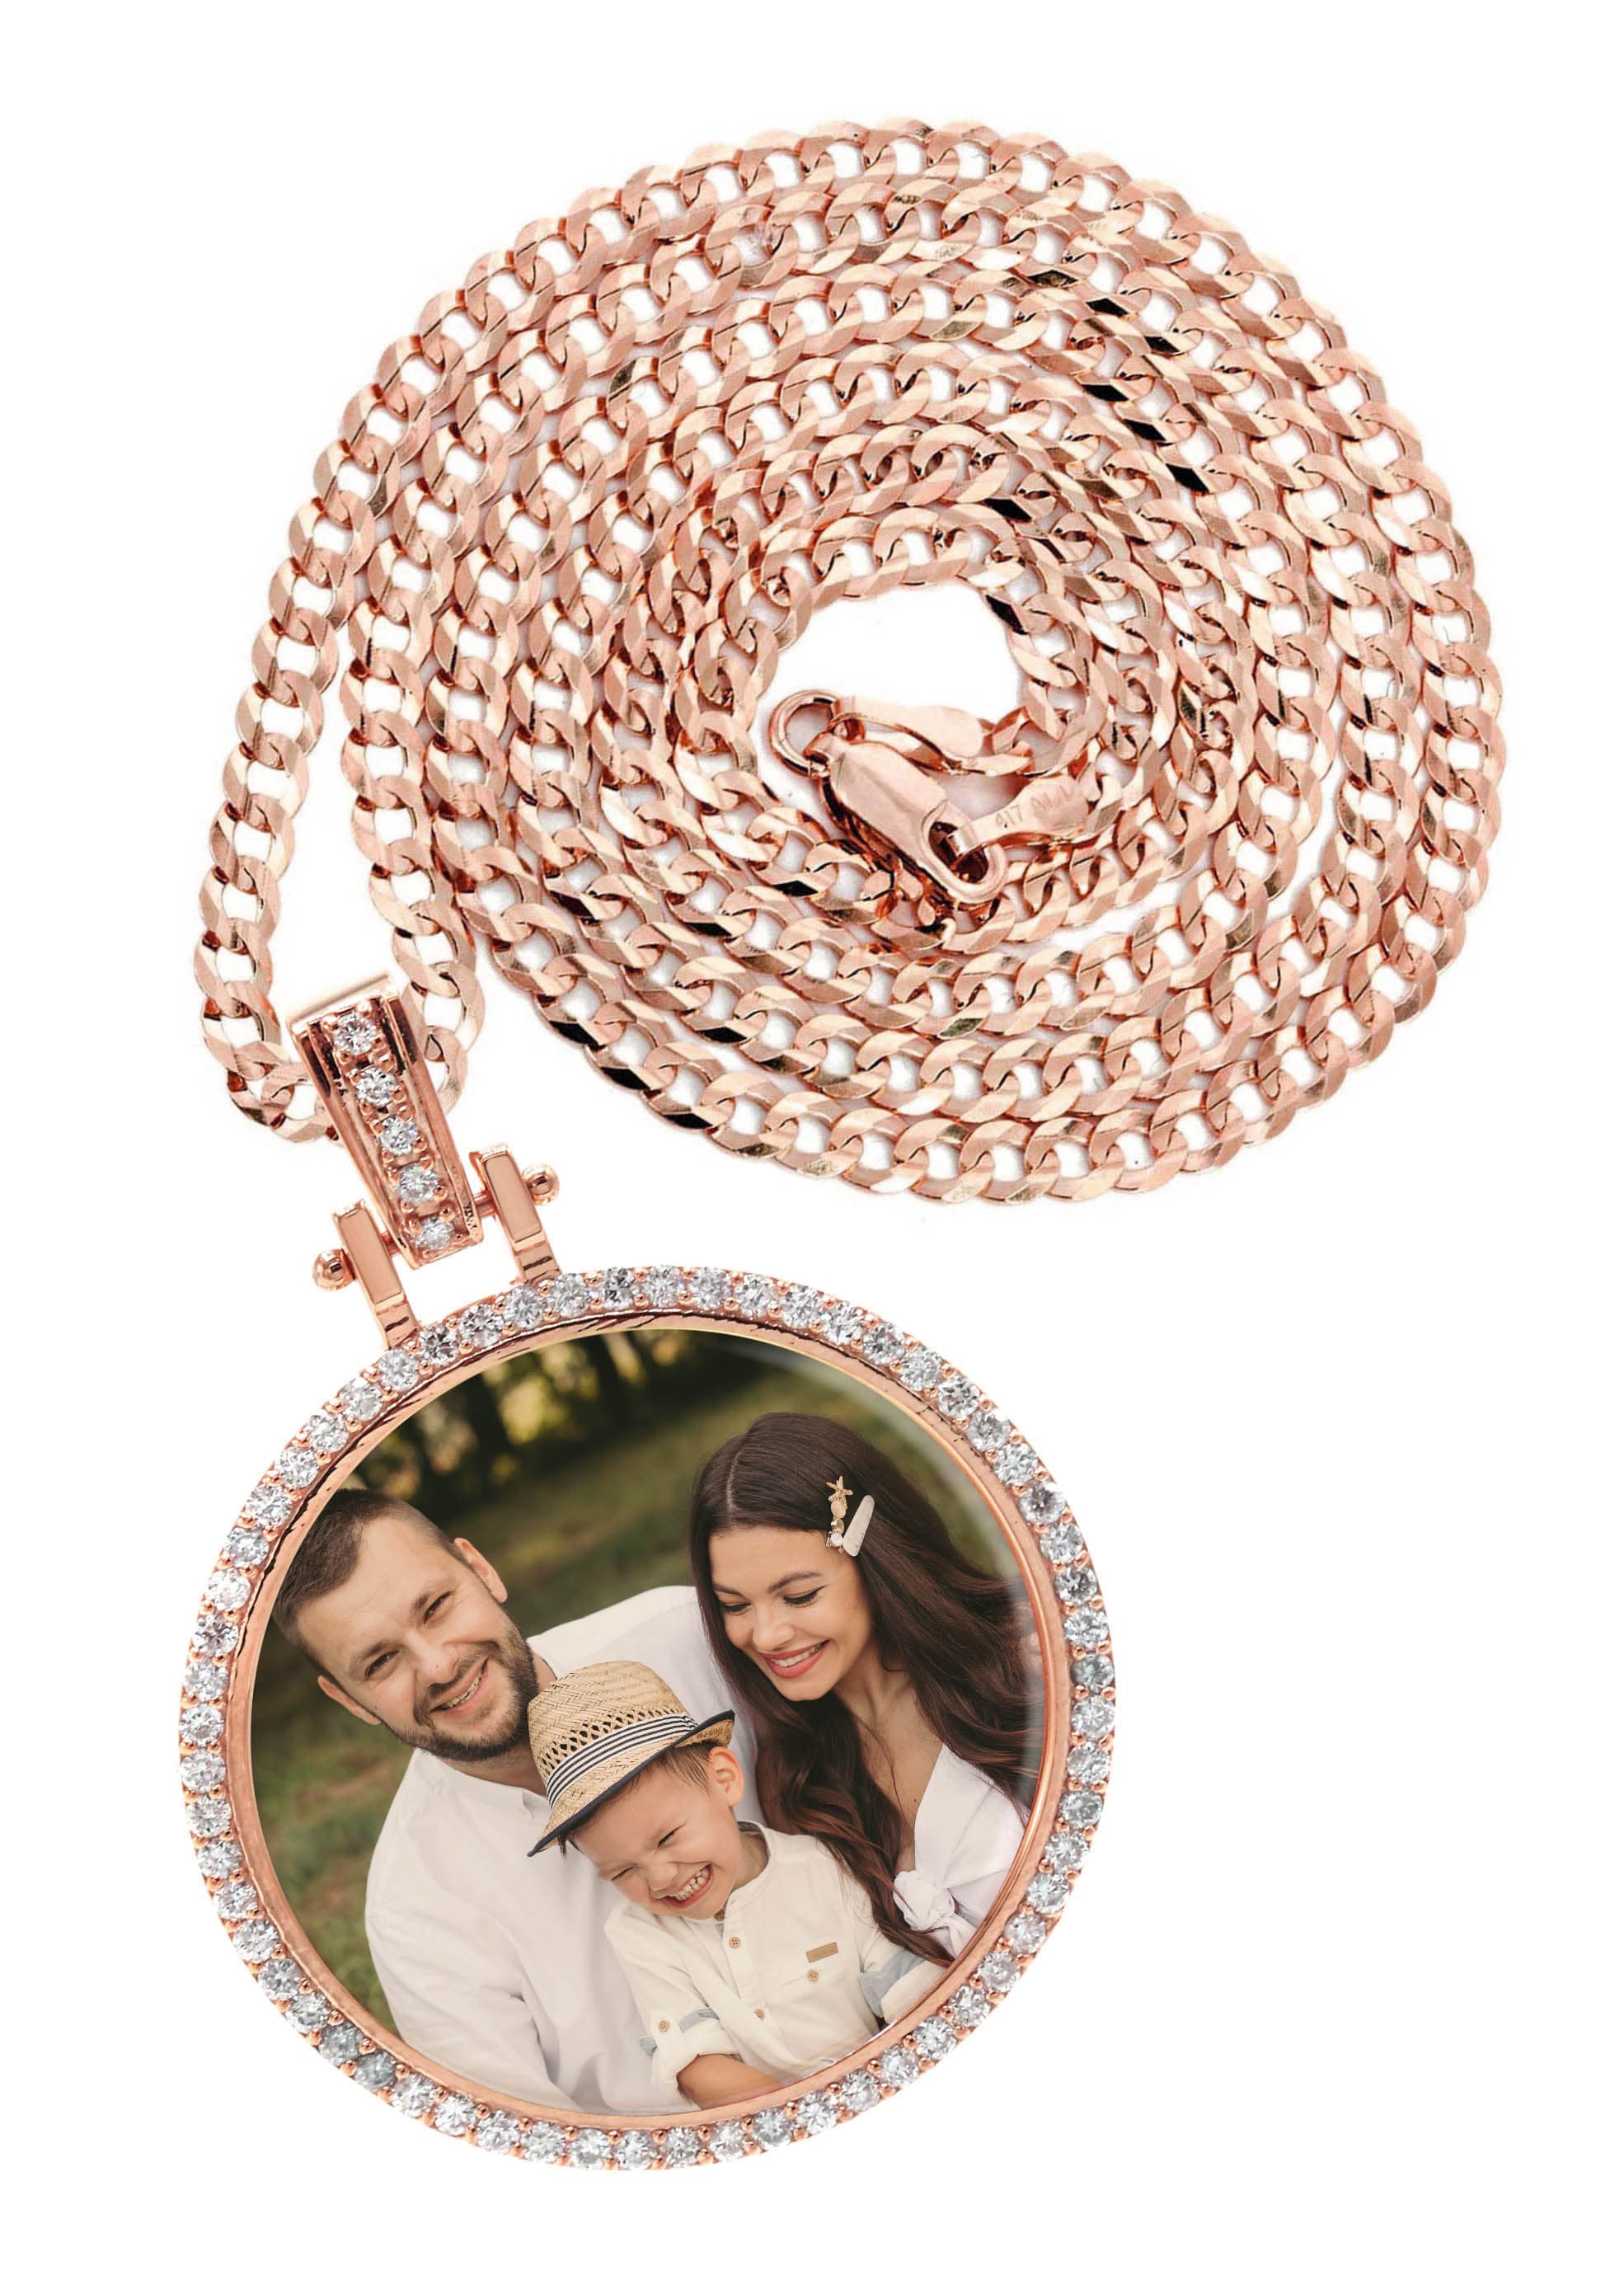 Diamond 10K/14K Rose Gold Large Round Picture Pendant Necklace | Appx. 0.65 Carat